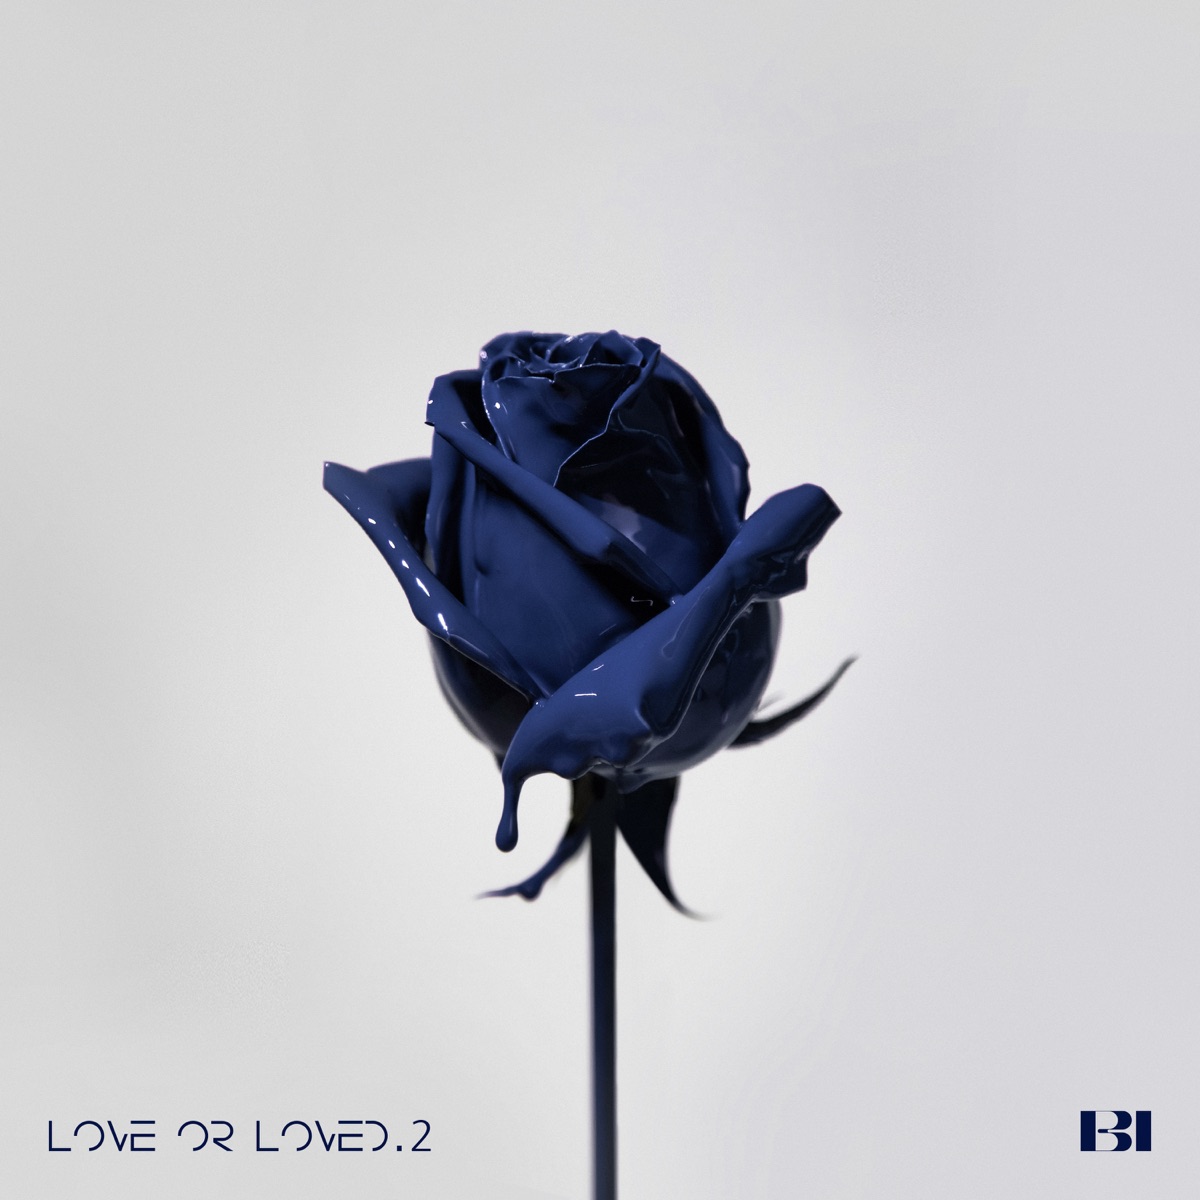 B.I – Love or Loved Pt. 2 – EP